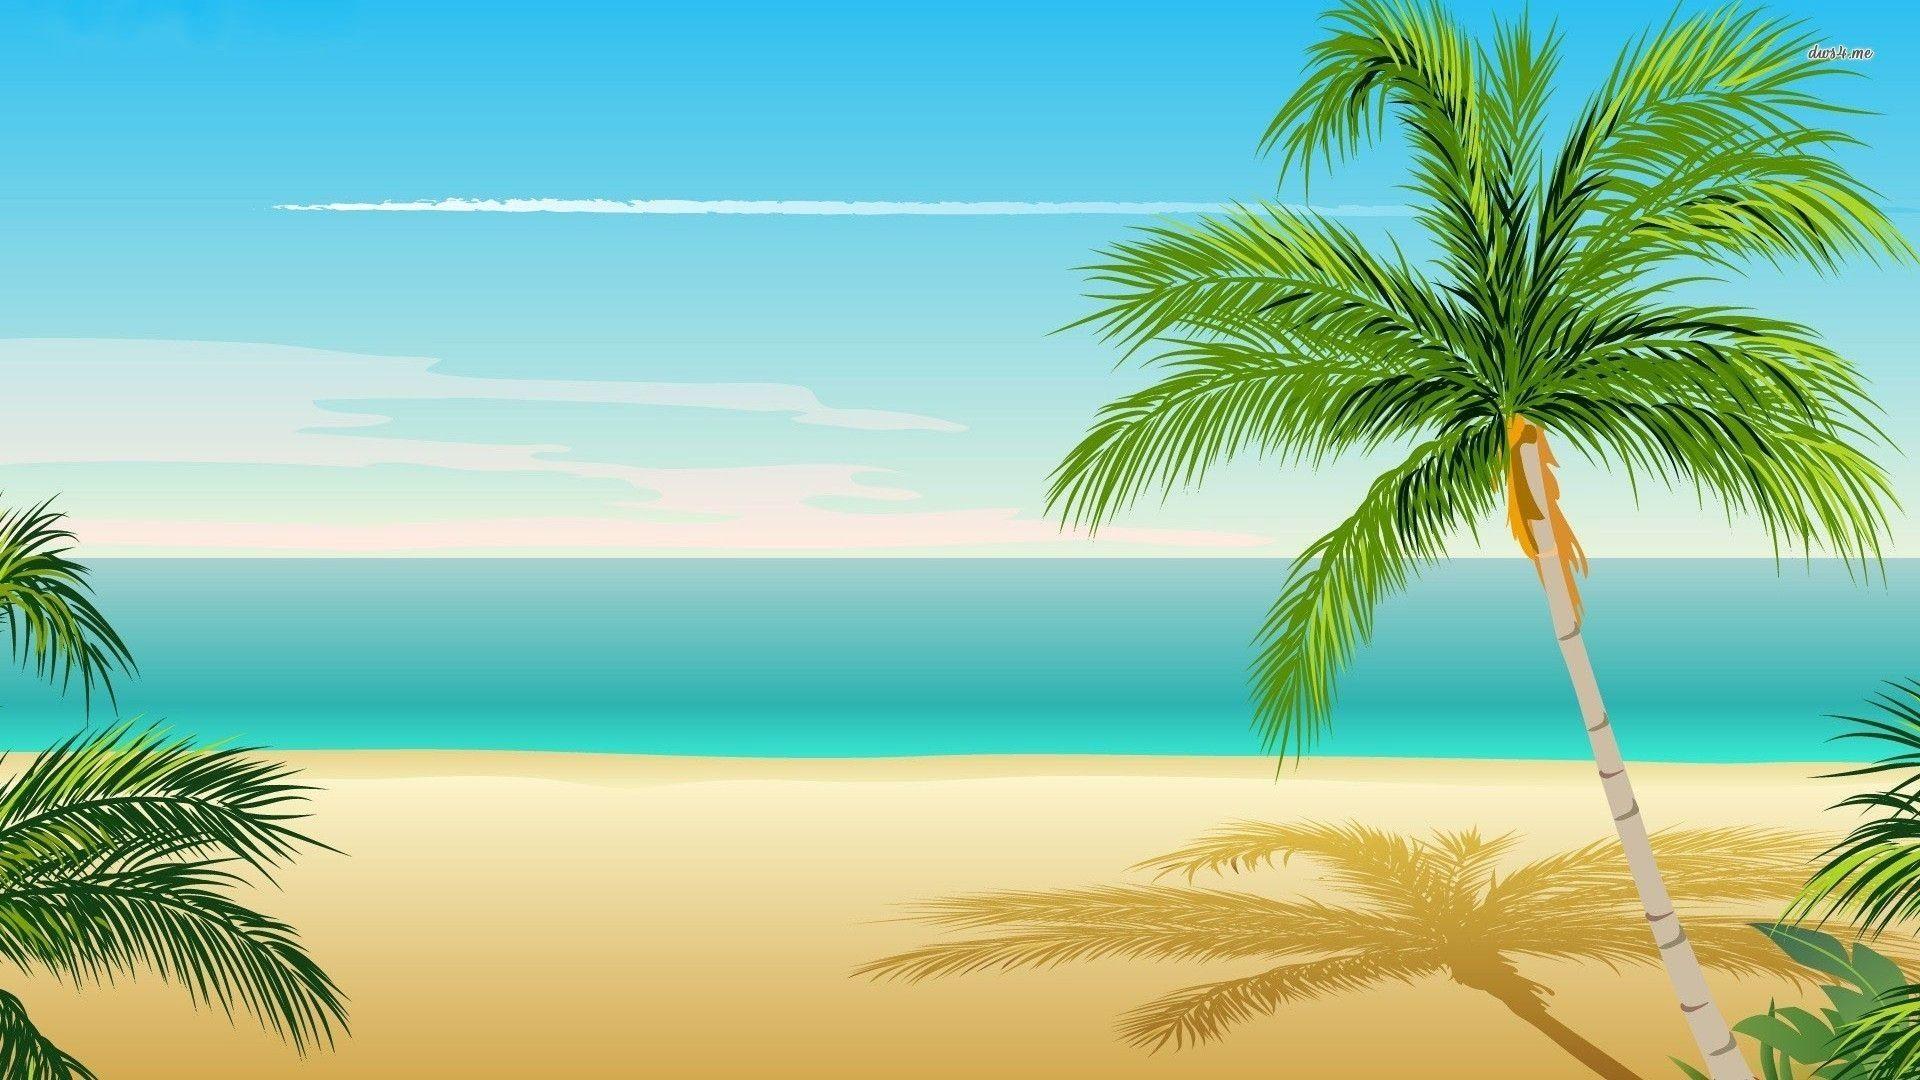 Palm Tree Desktop Wallpaper background picture